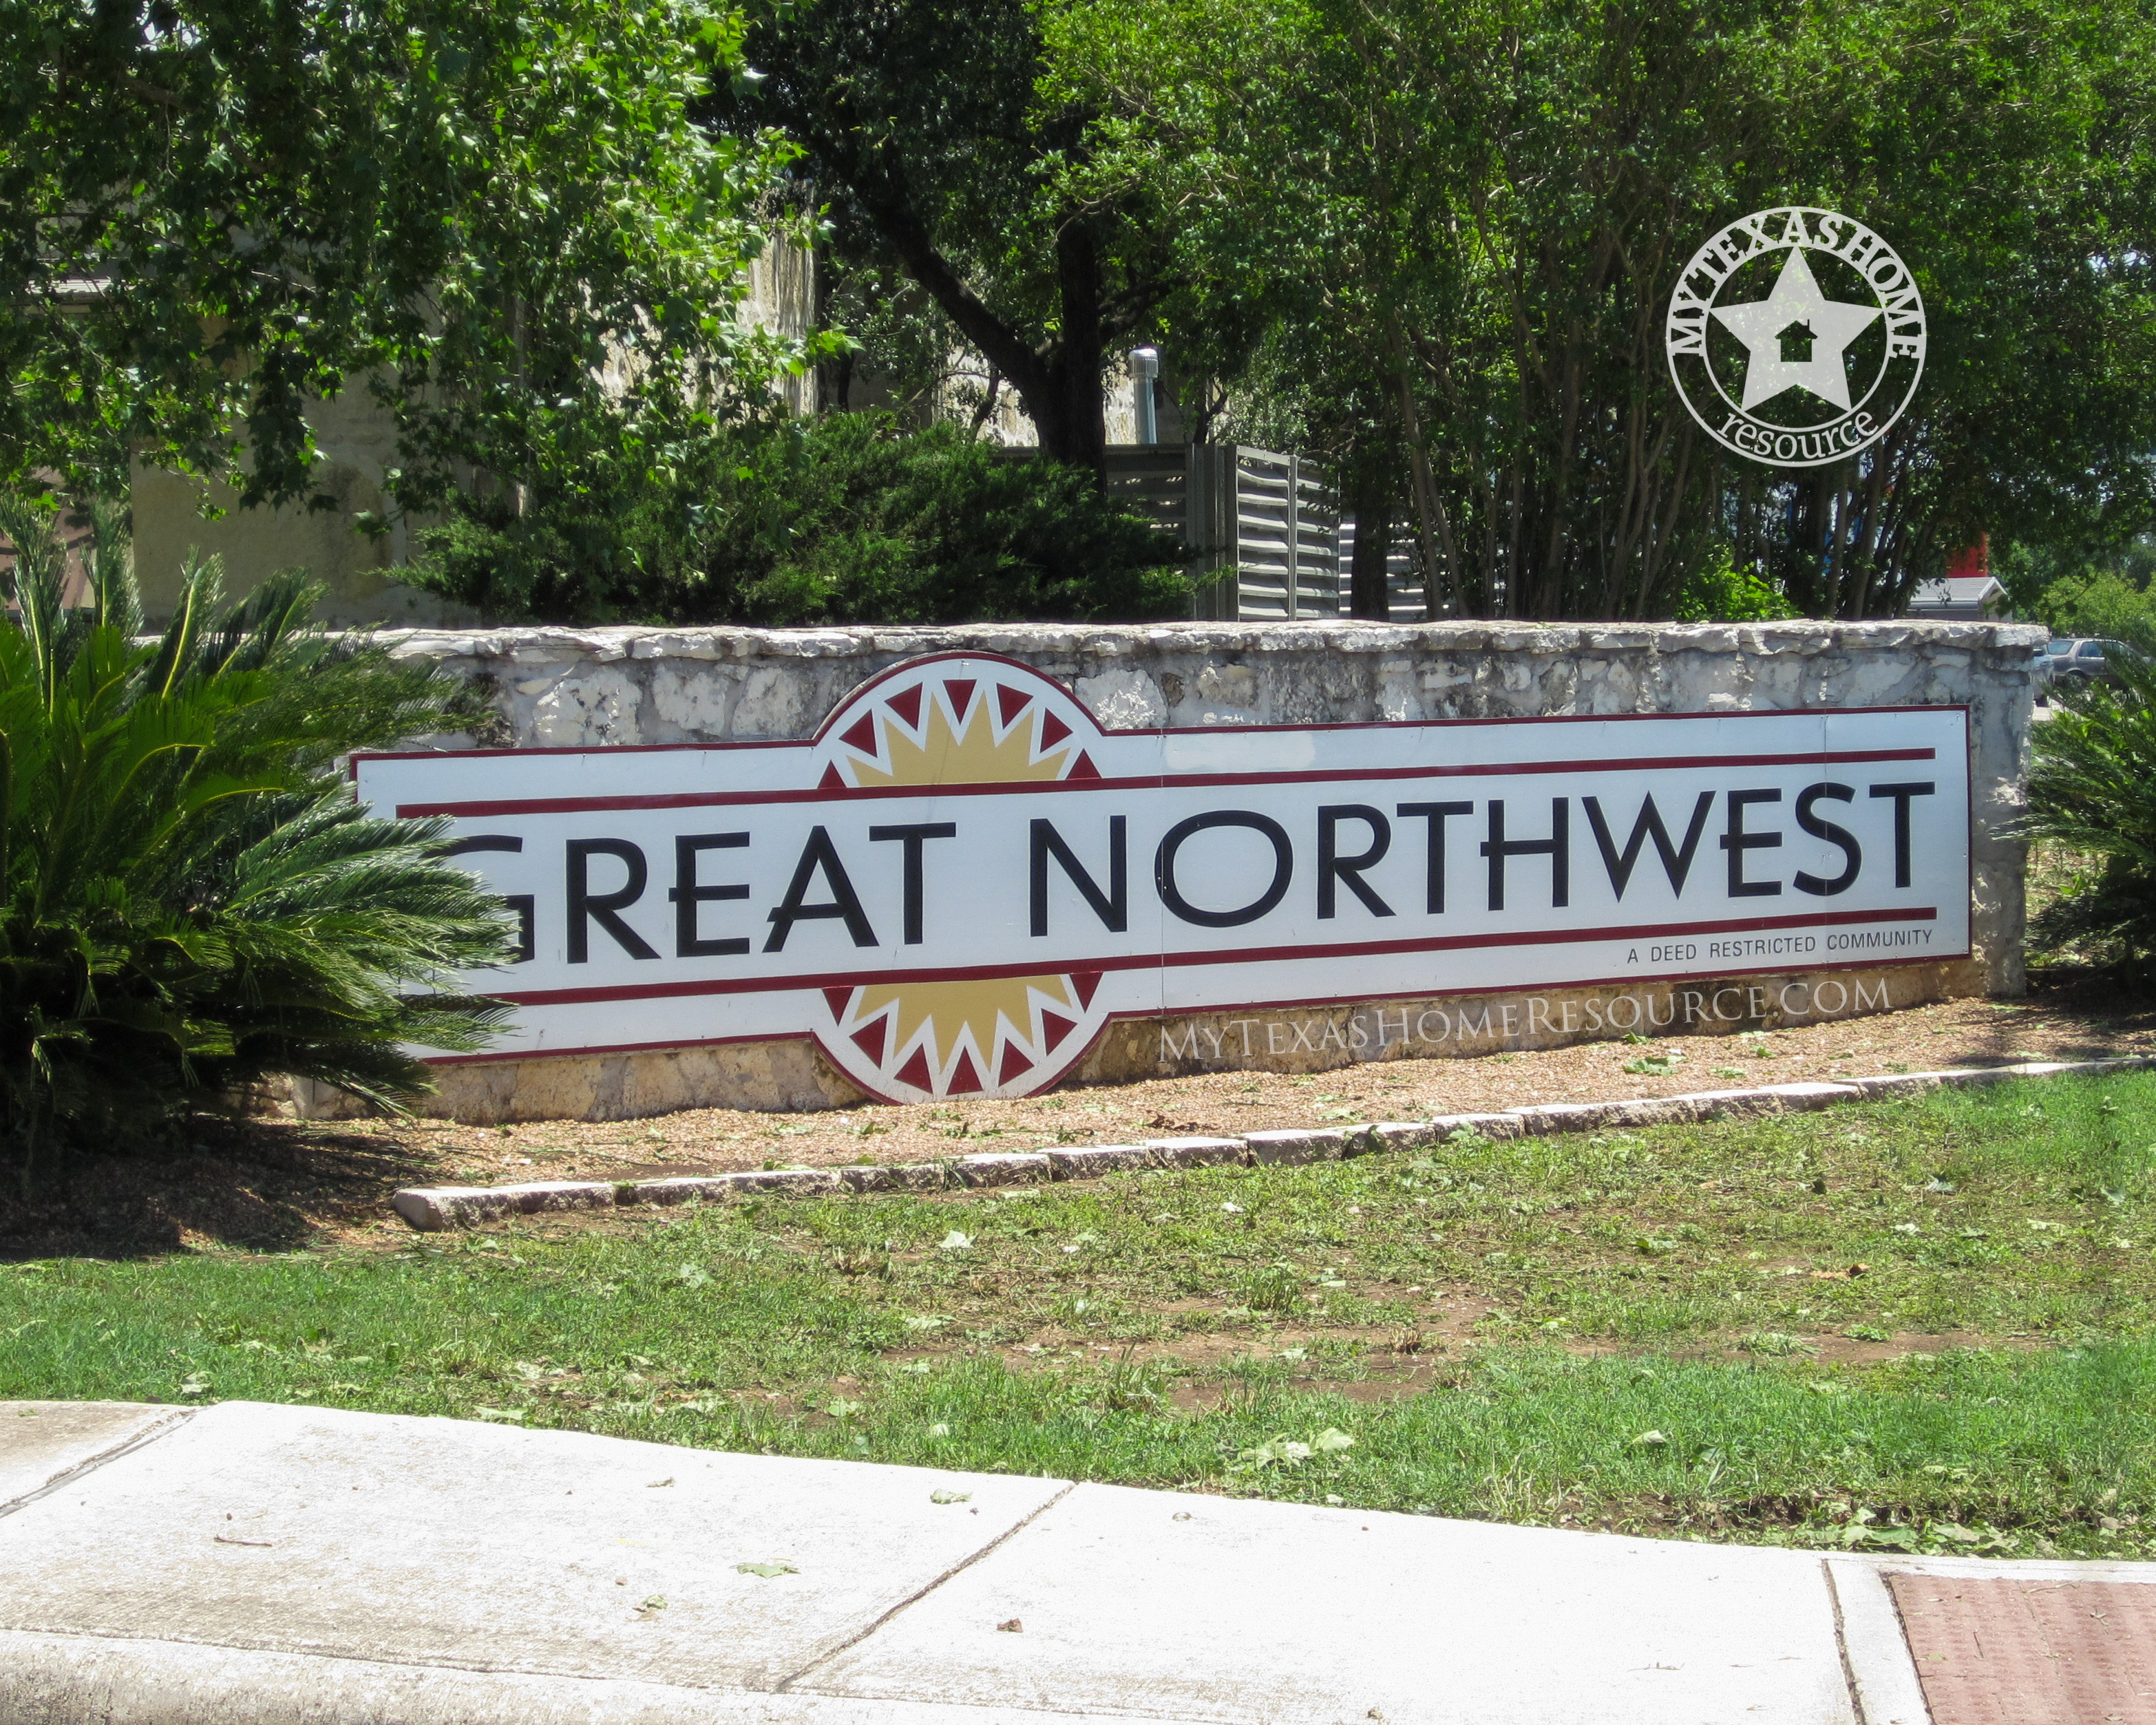 Great Northwest Community San Antonio, TX